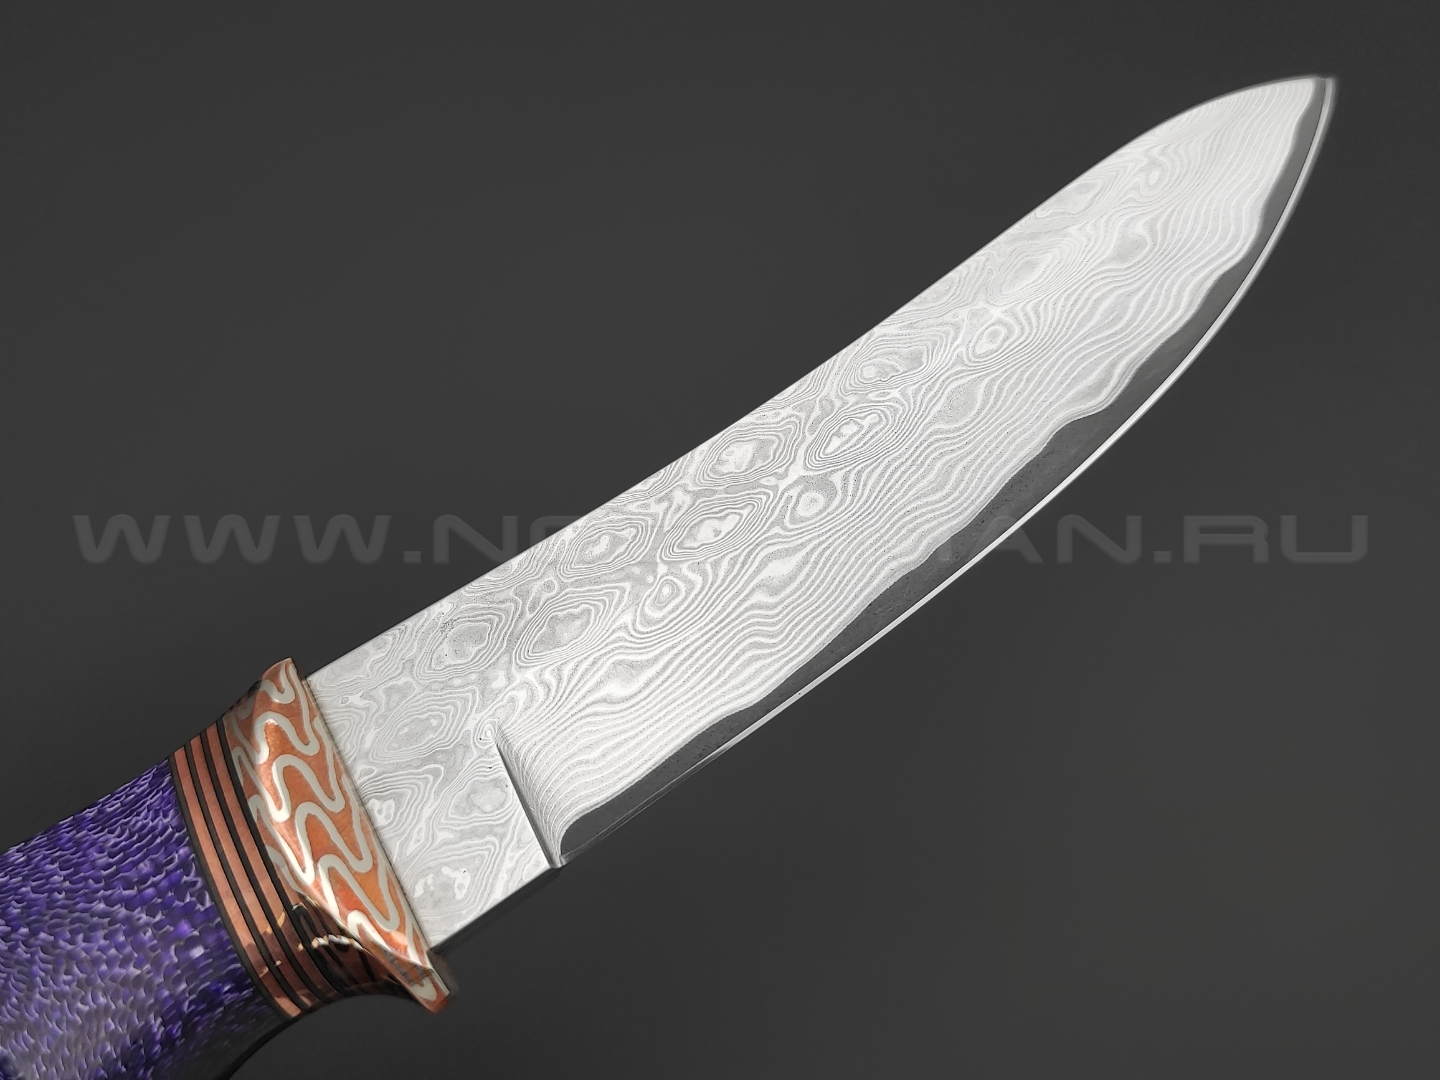 Кузница Васильева нож НЛВ146 ламинат CPM S90V, рукоять Alutex purple twill, мокумэ-ганэ, бронза